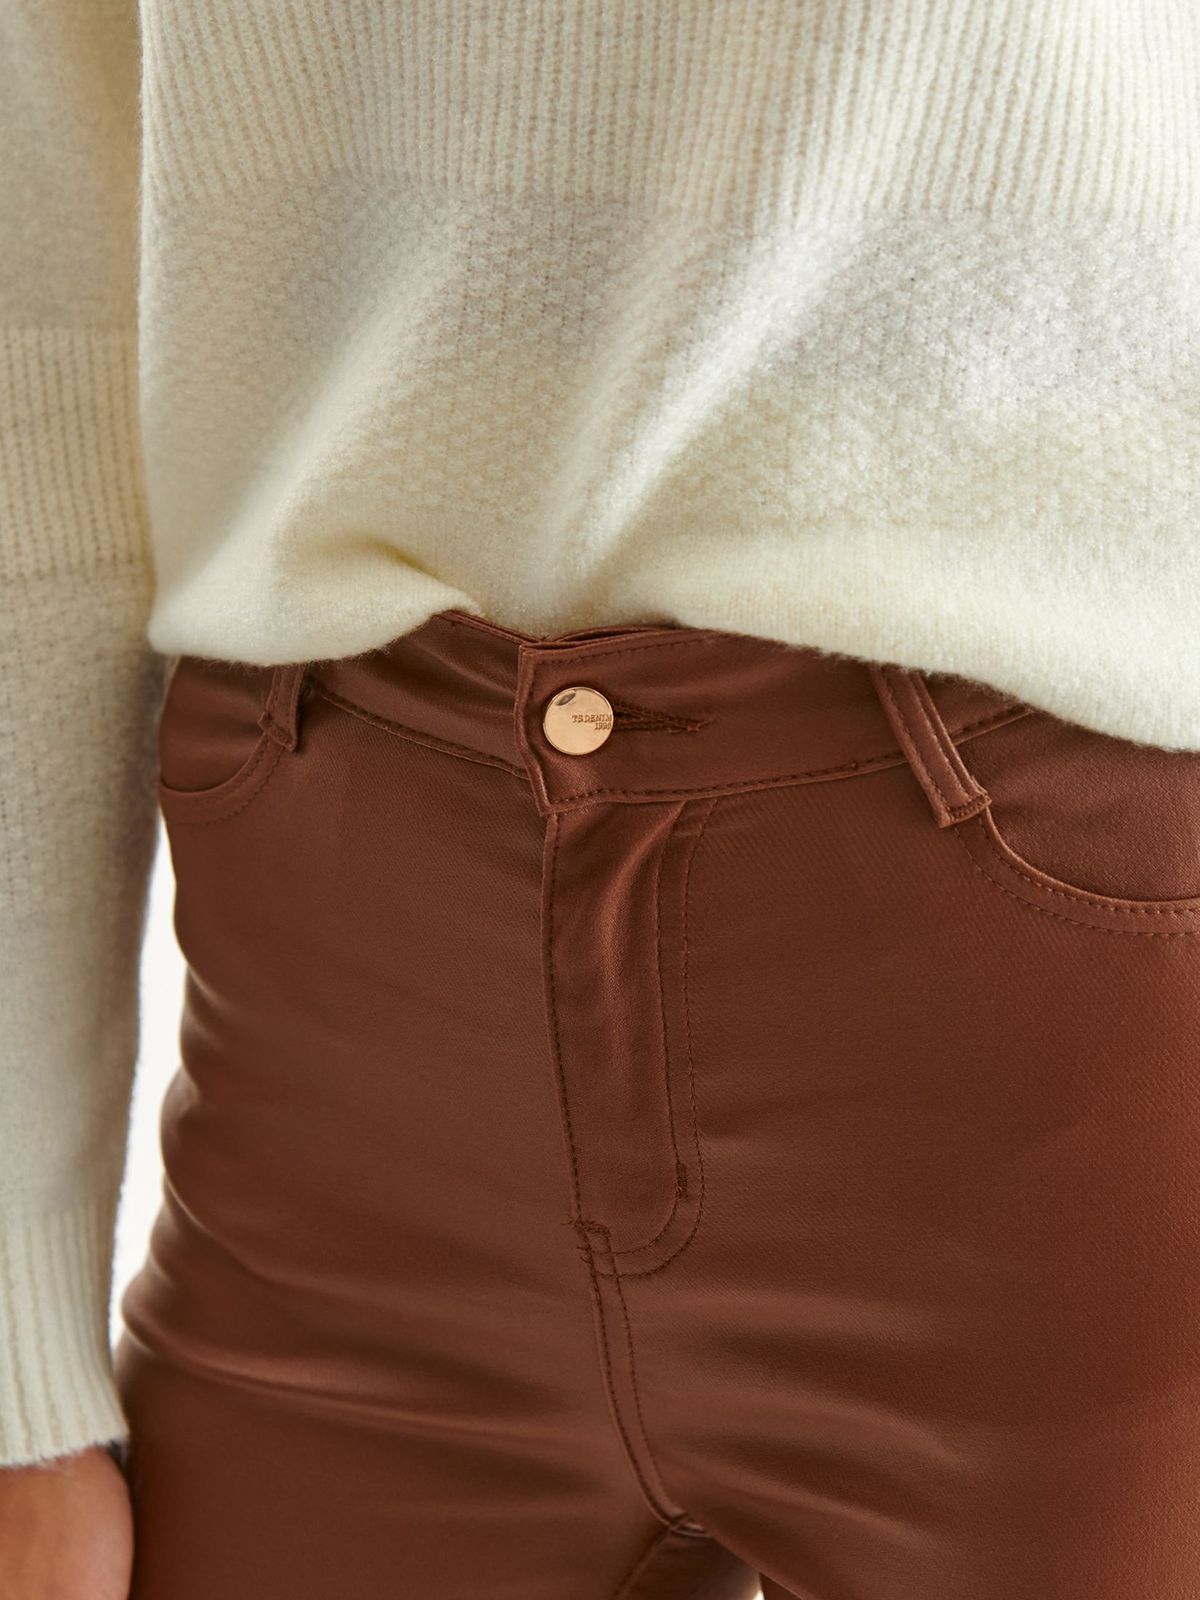 Pantaloni din piele ecologica maro-deschis conici - Top Secret 5 - StarShinerS.ro